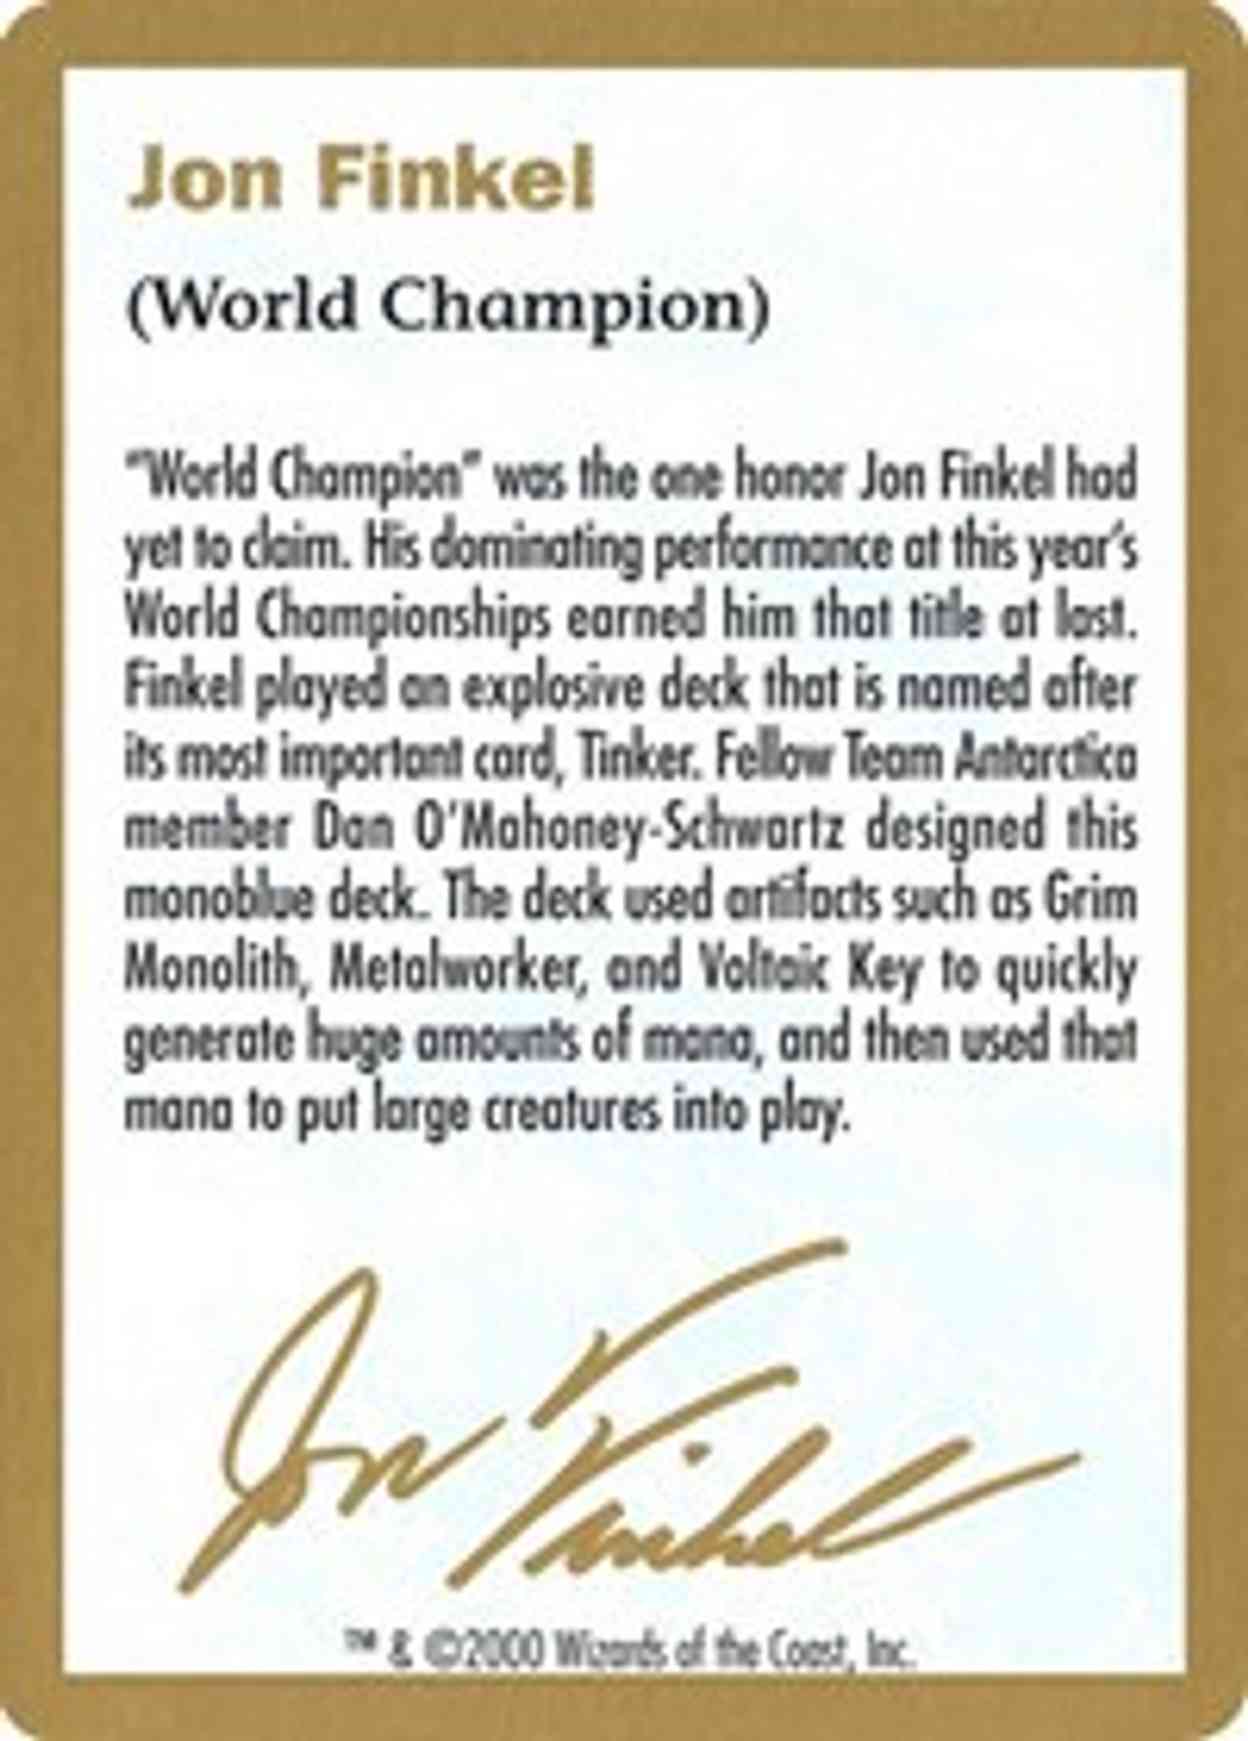 2000 Jon Finkel Biography Card magic card front